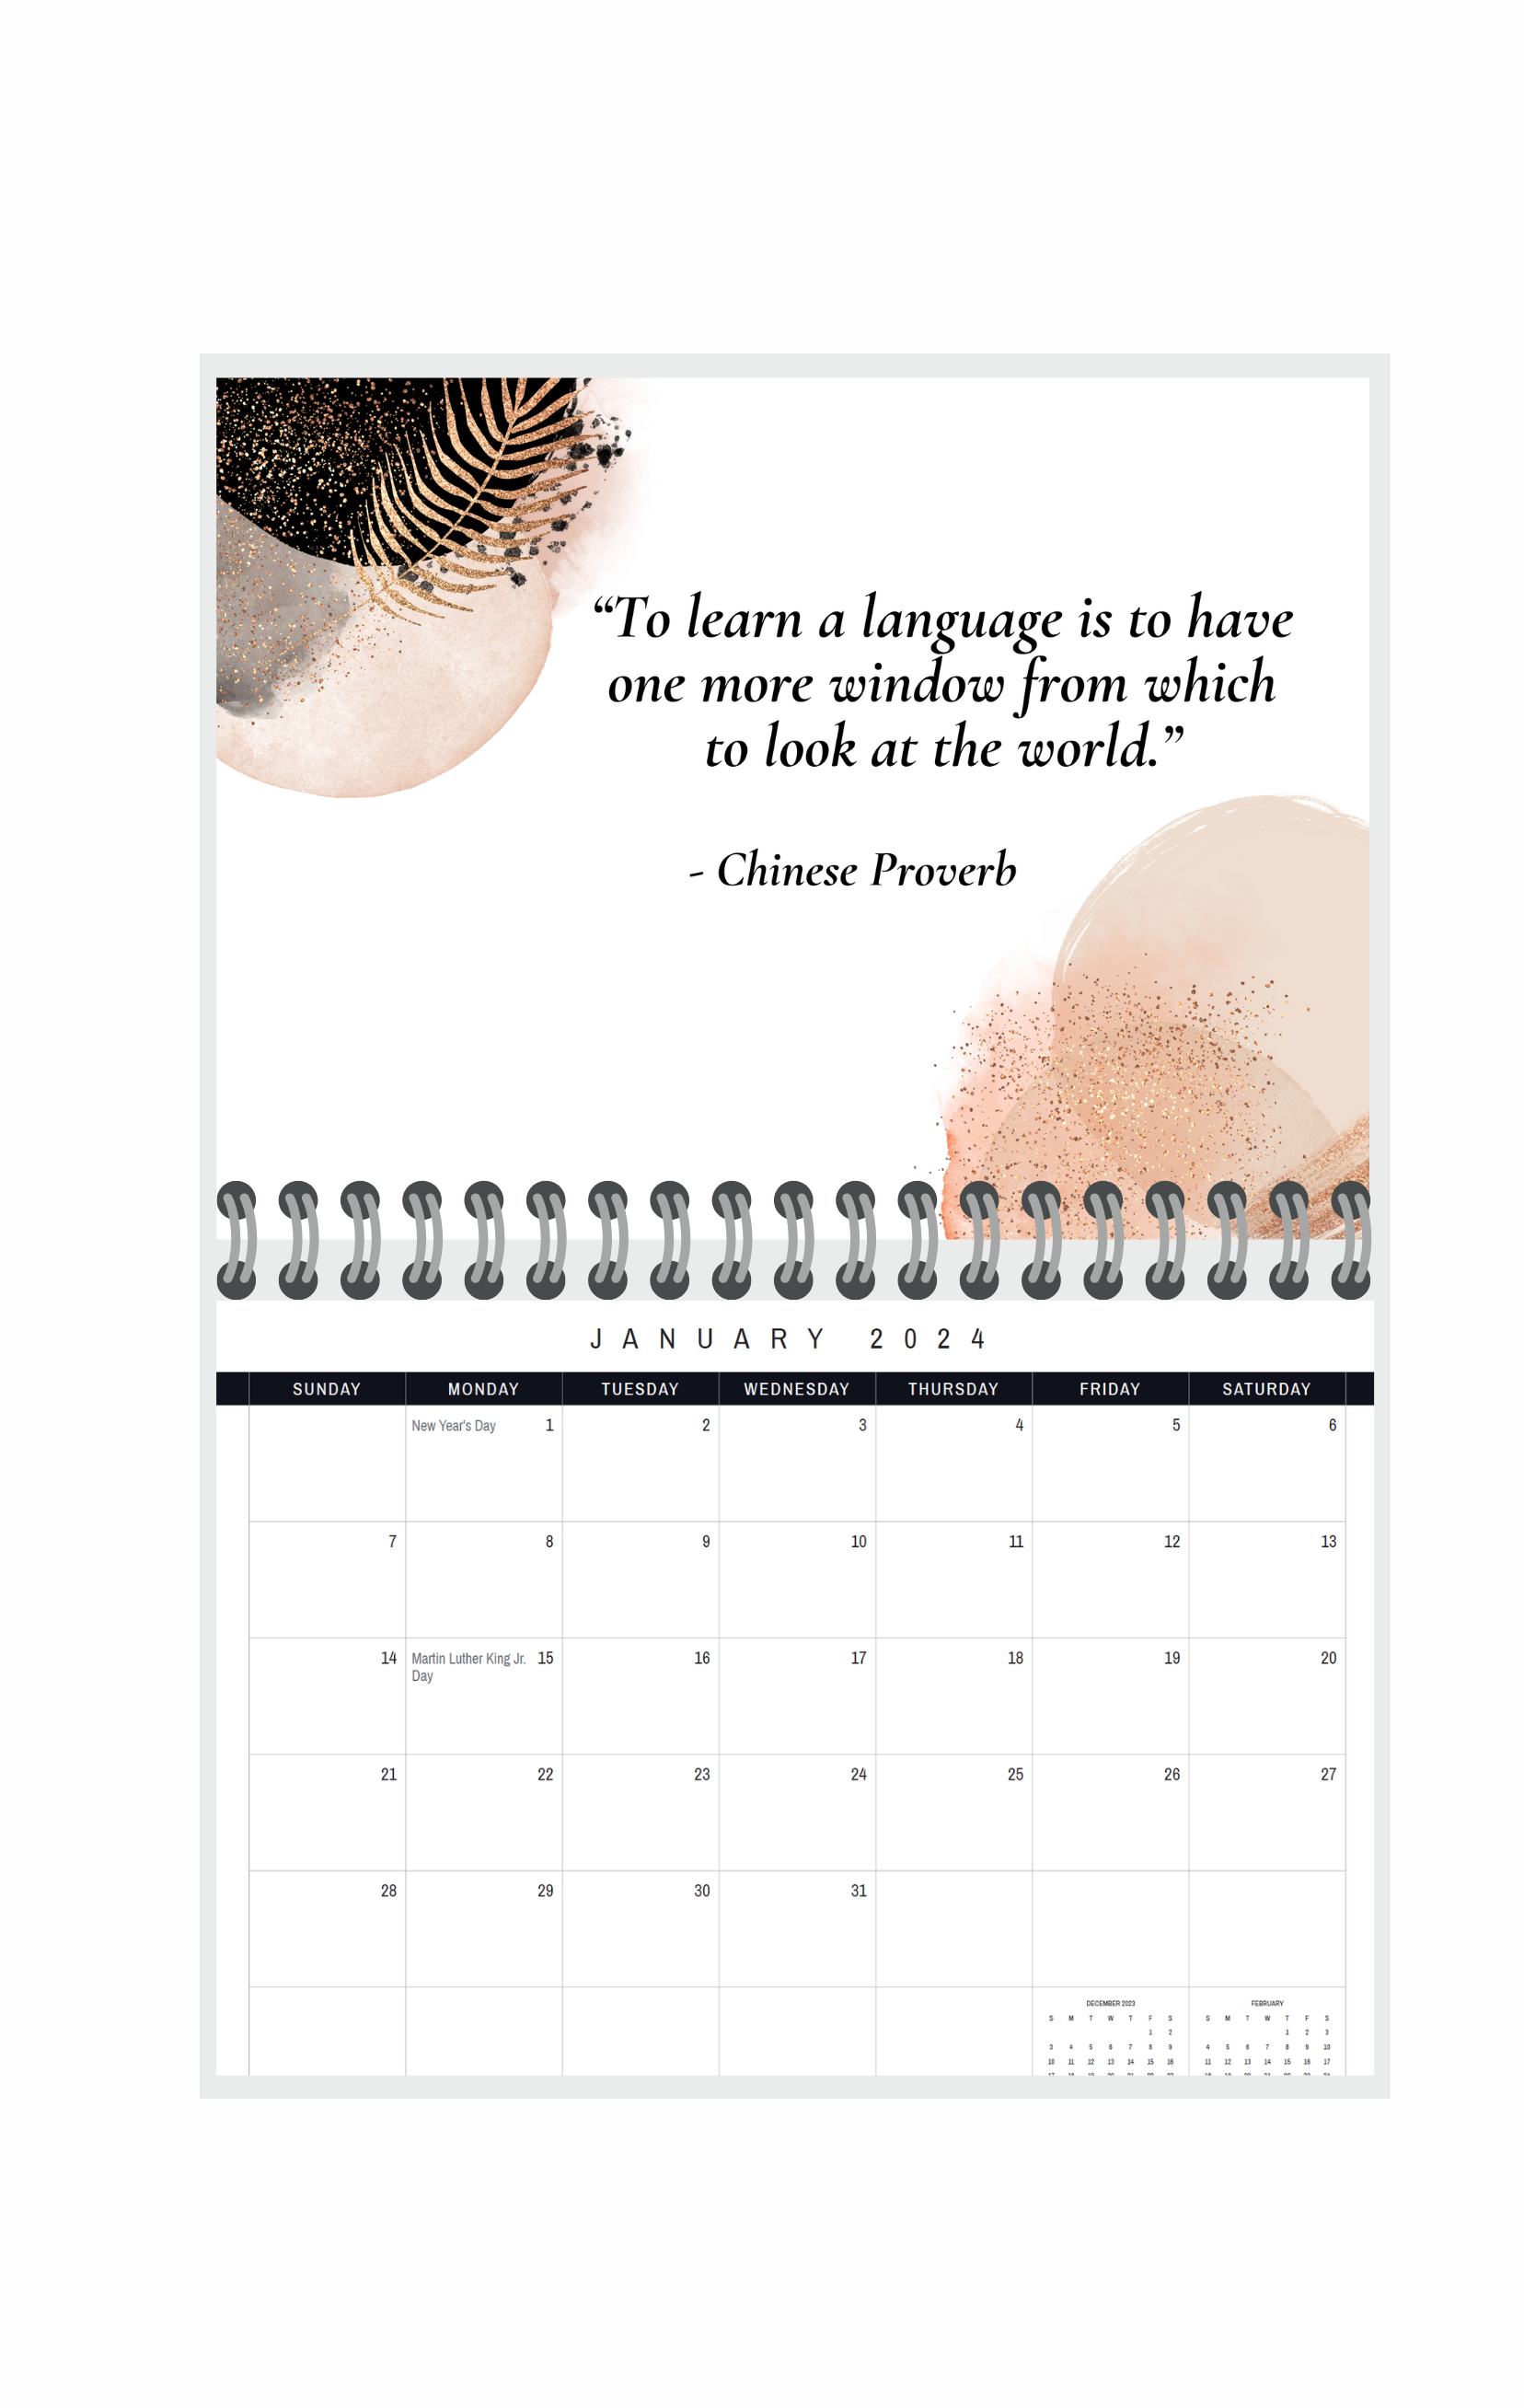 calendar quotes